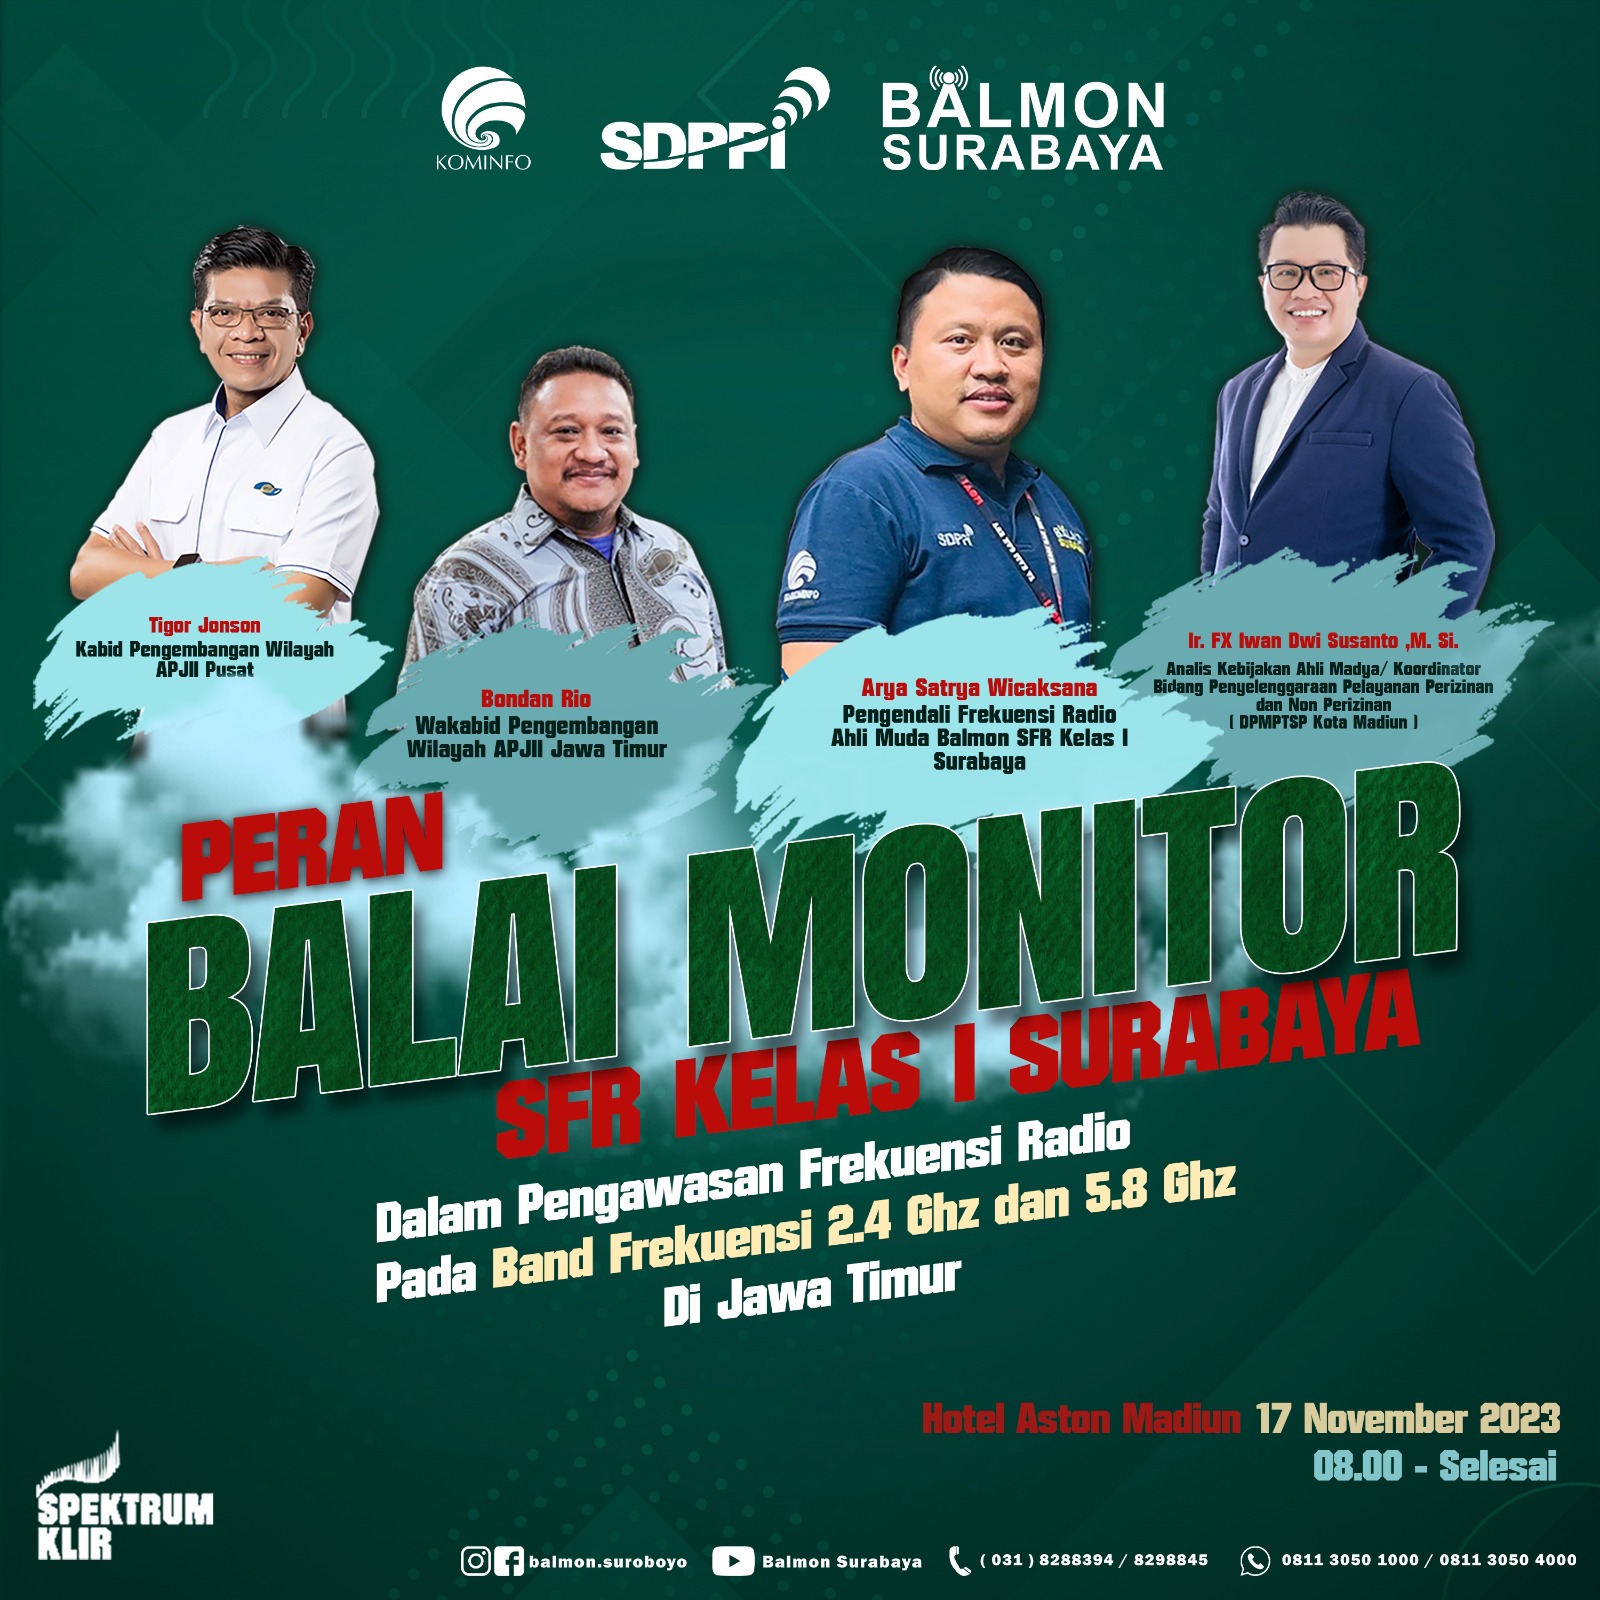 Sosialisasi Peran Balmon SFR Kelas I Surabaya dalam Pengawasan Frekuensi Radio 2.4 Ghz dan 5.8 Ghz di Jawa Timur